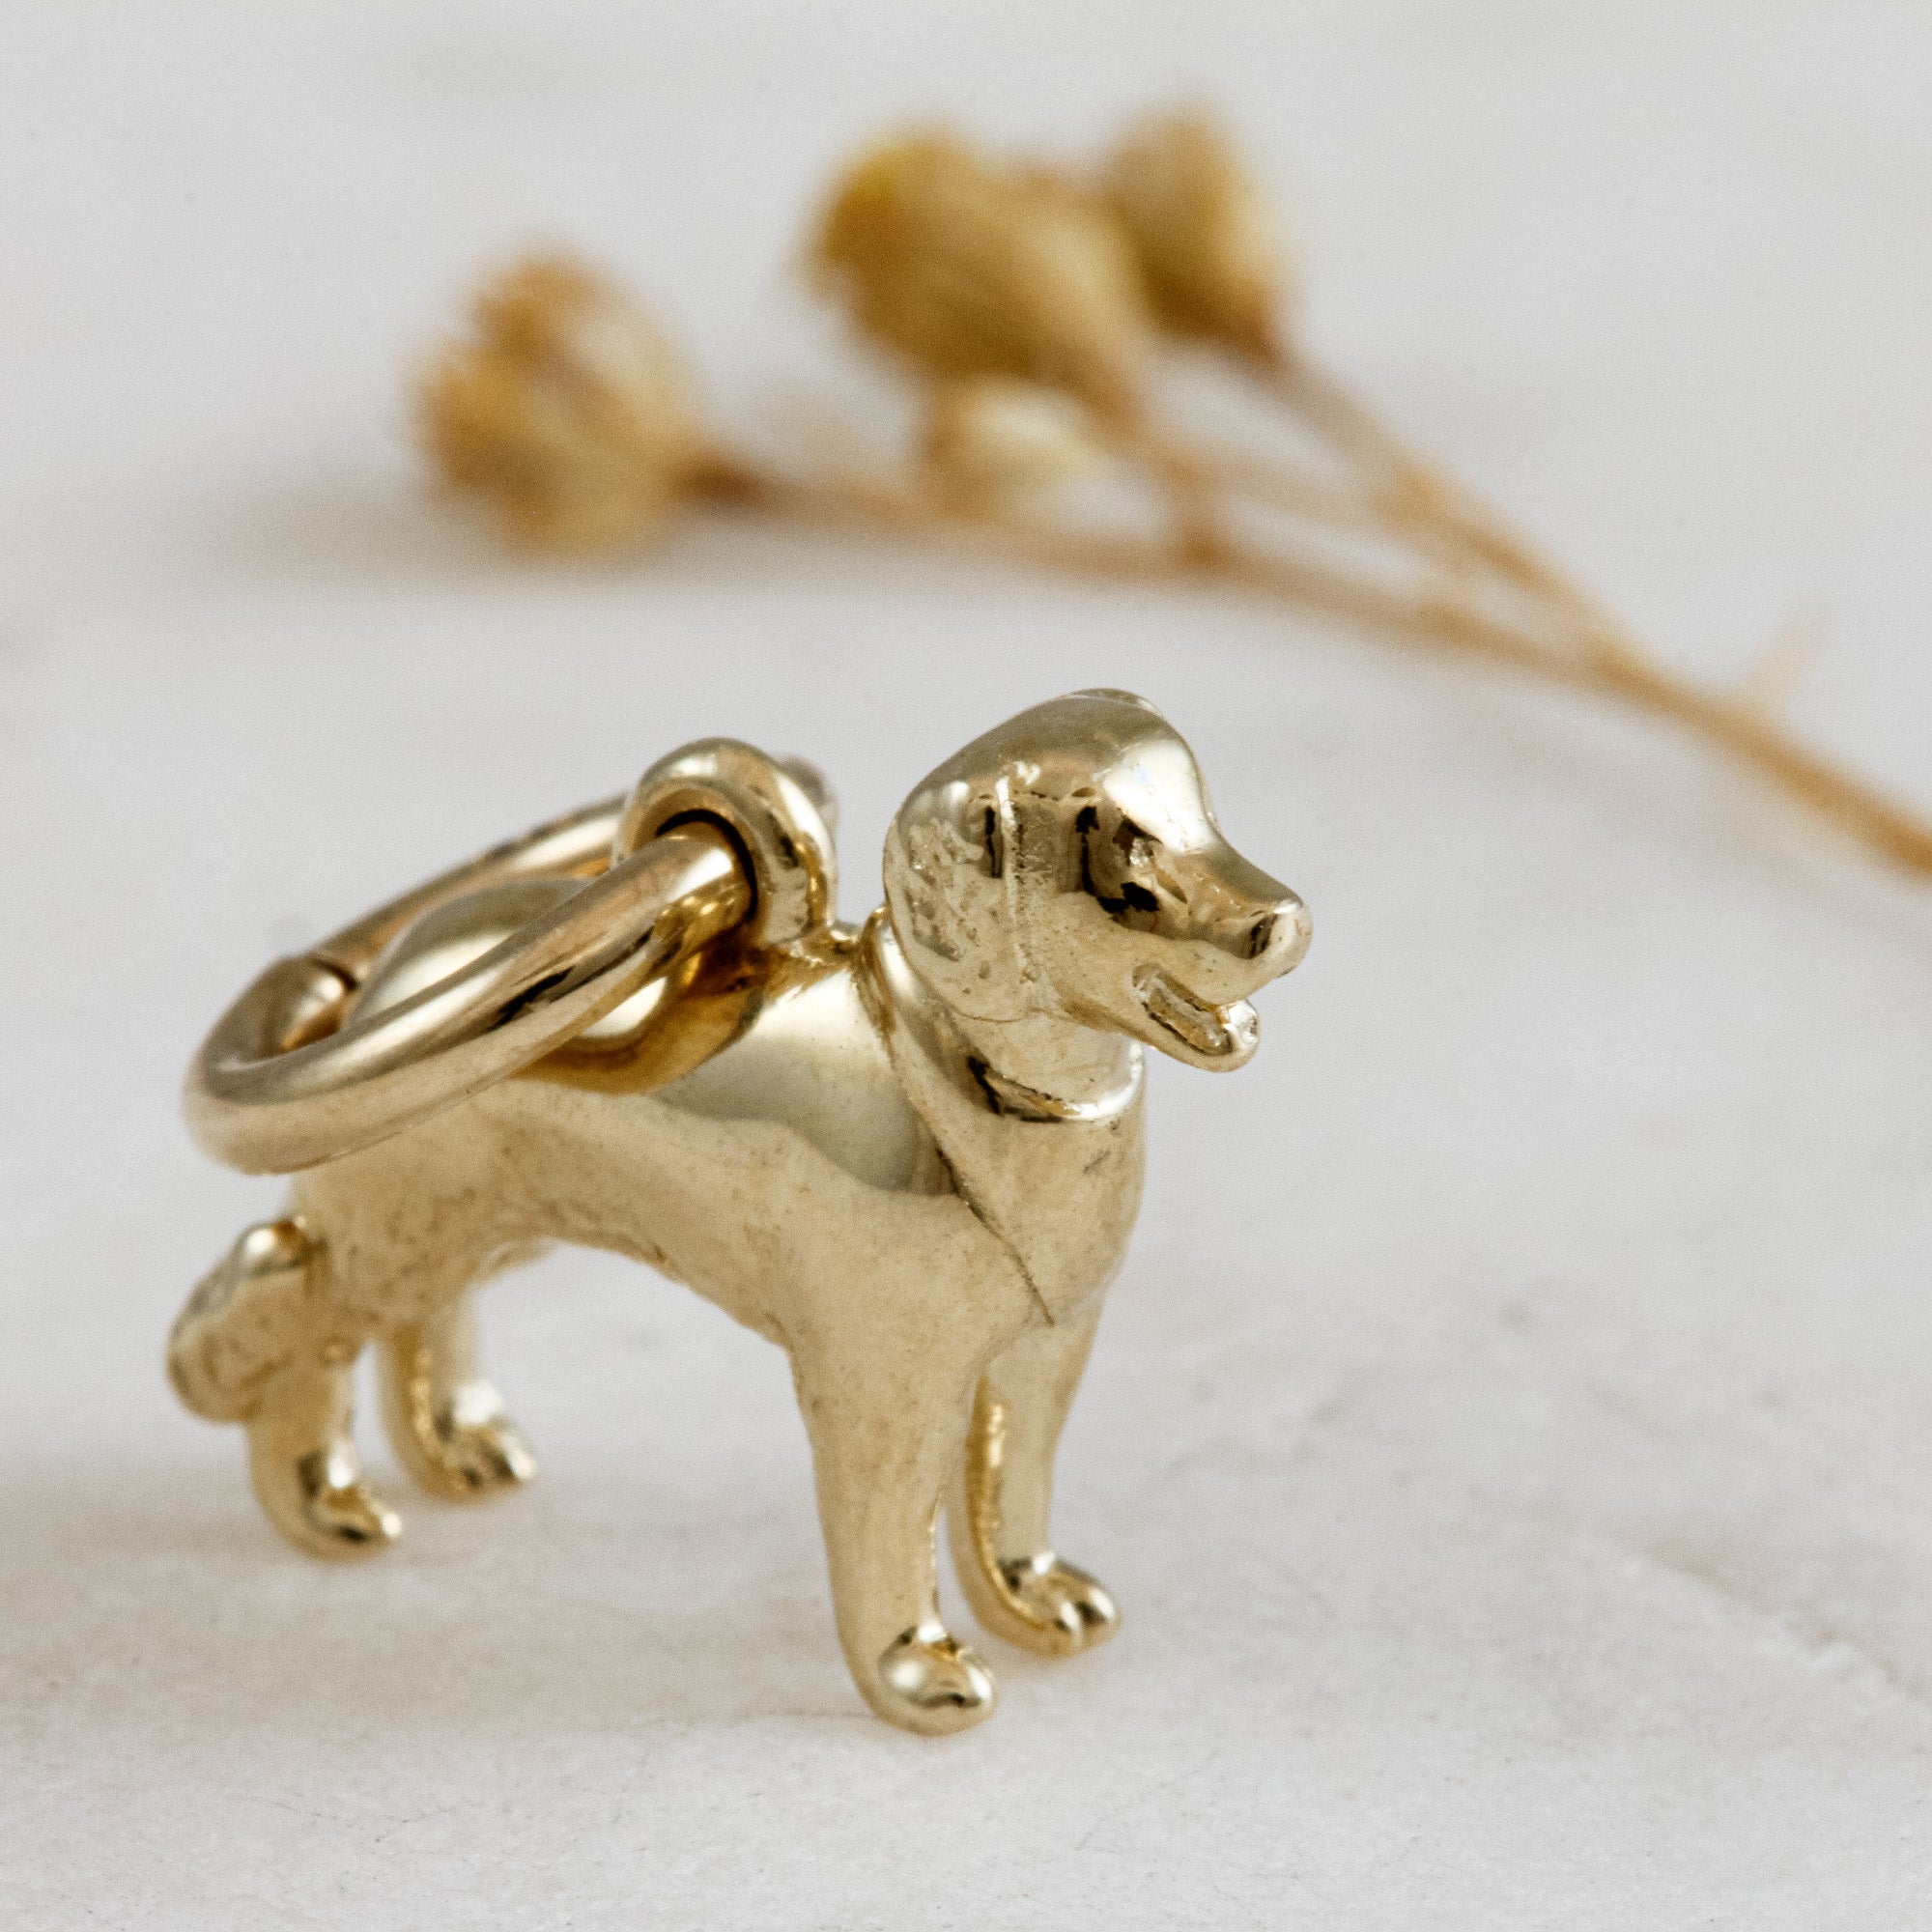 golden retriever solid gold dog charm for a necklace or bracelet